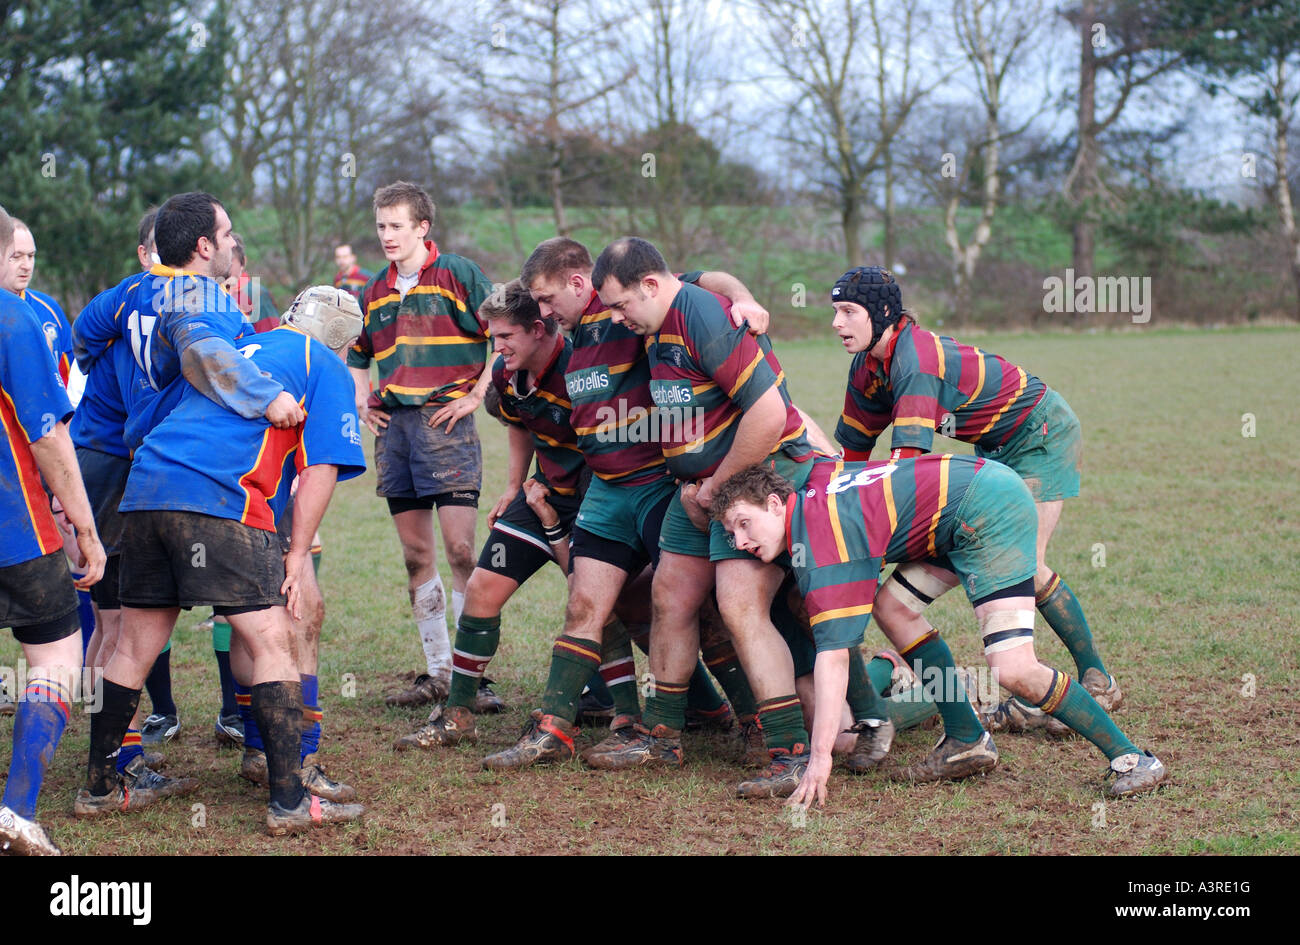 Rugby Union at club level, Leamington Spa, Warwickshire, England, UK Stock Photo